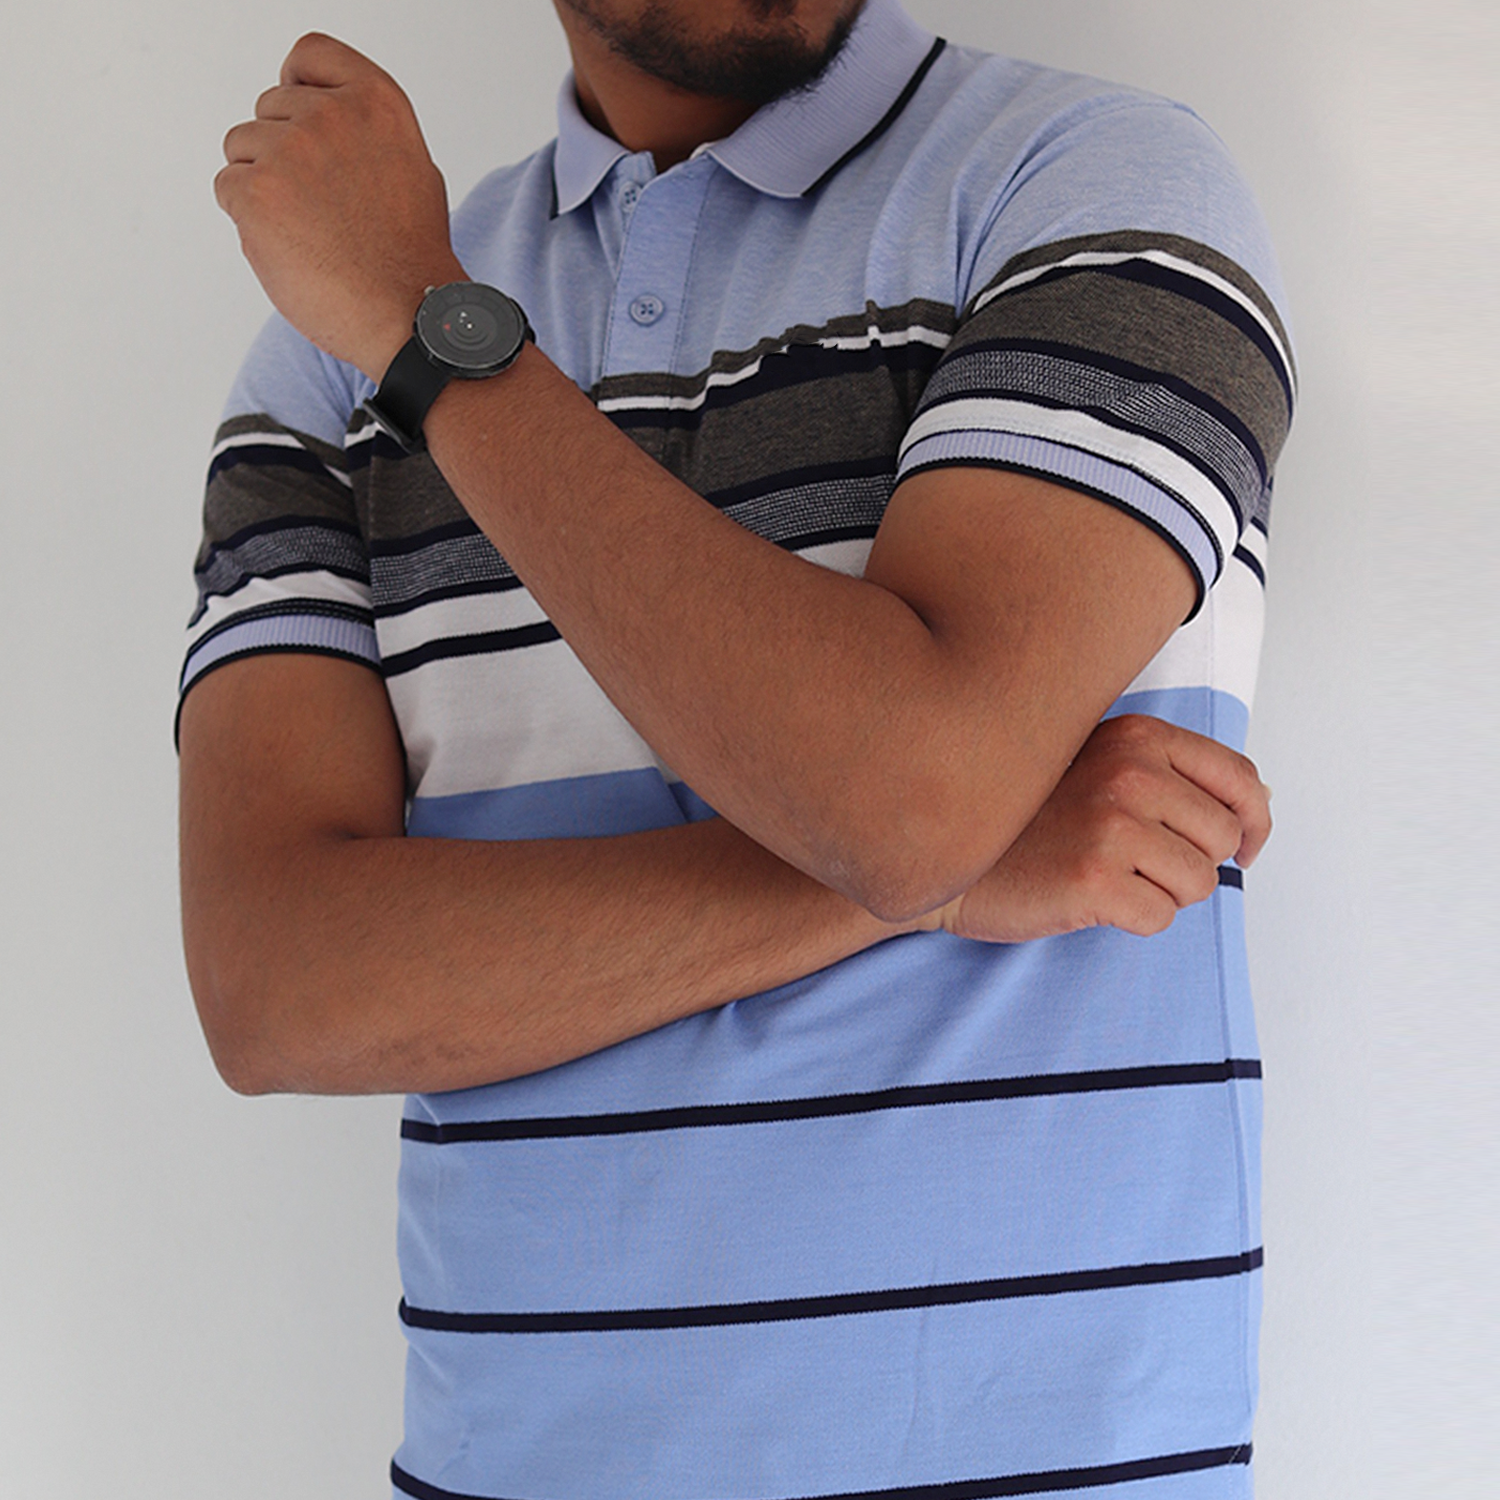 Stylish Spread Collar Polo T-shirt for Men